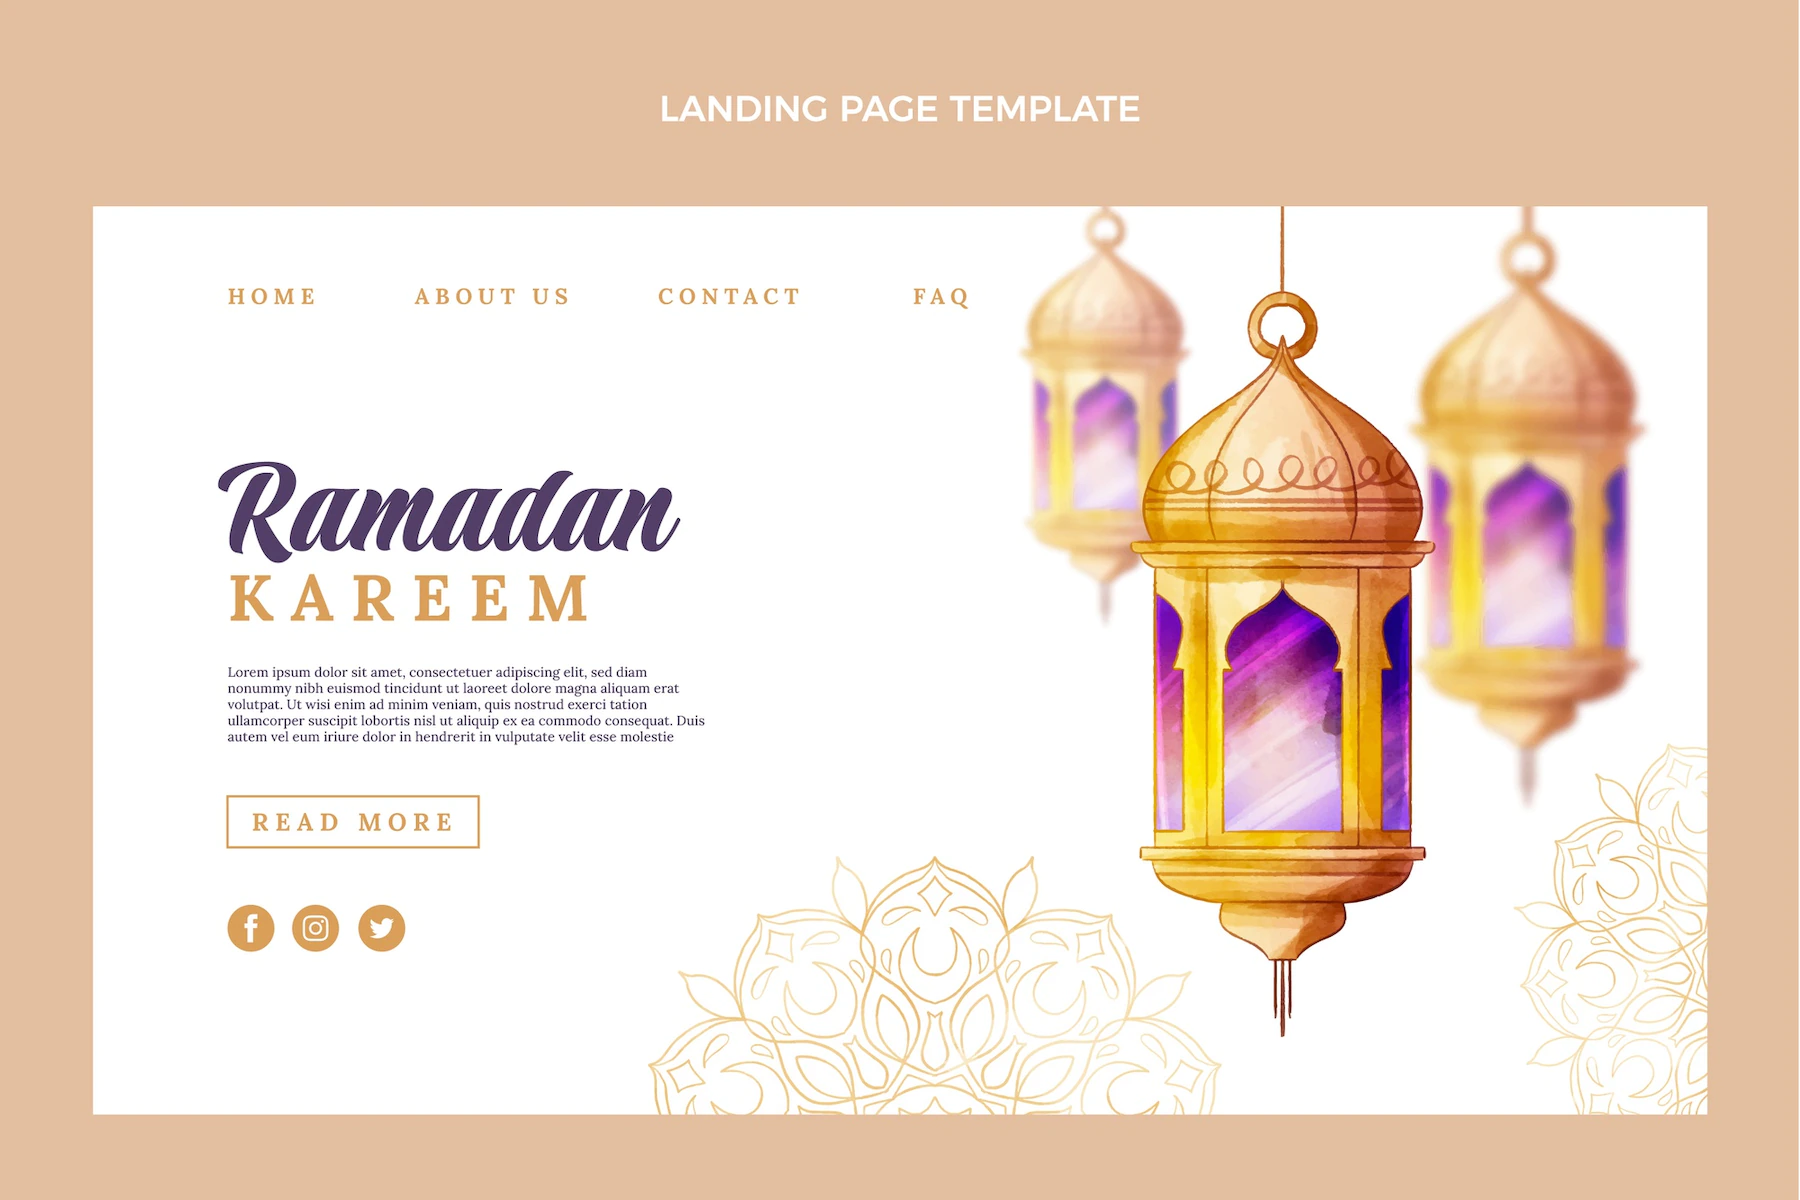 Watercolor Ramadan Landing Page Template 52683 82729